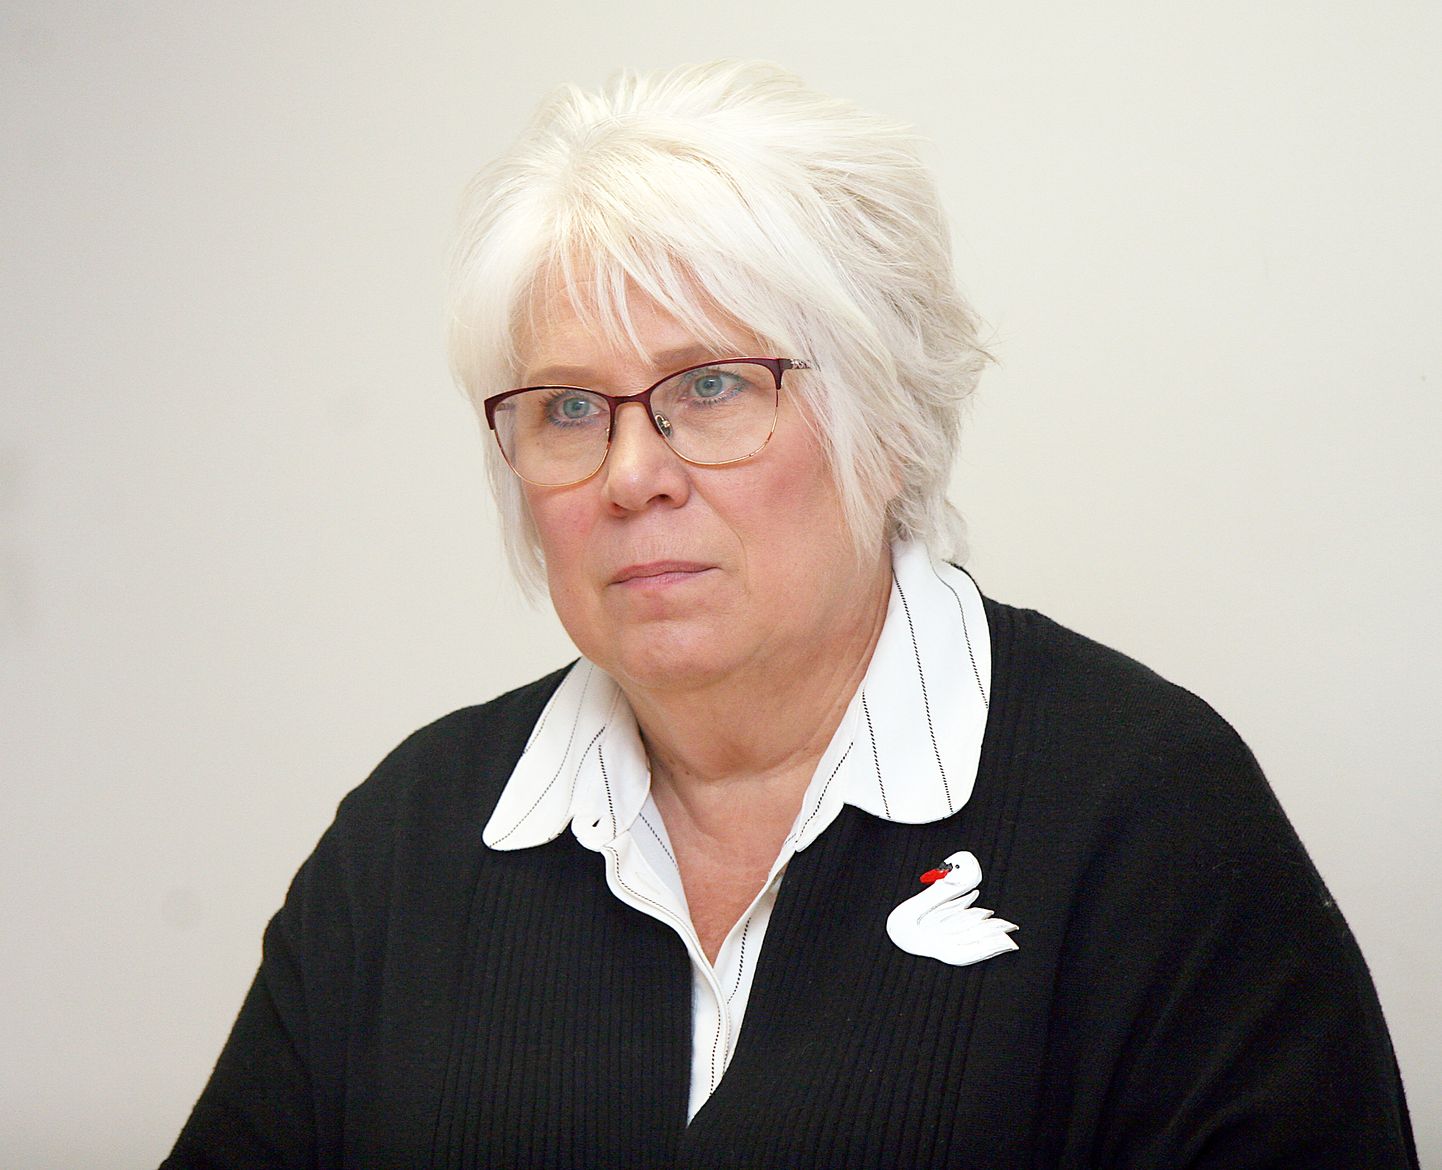 Marina Kaljurand, Euroopa Parlamendi liige, sotsiaaldemokraat